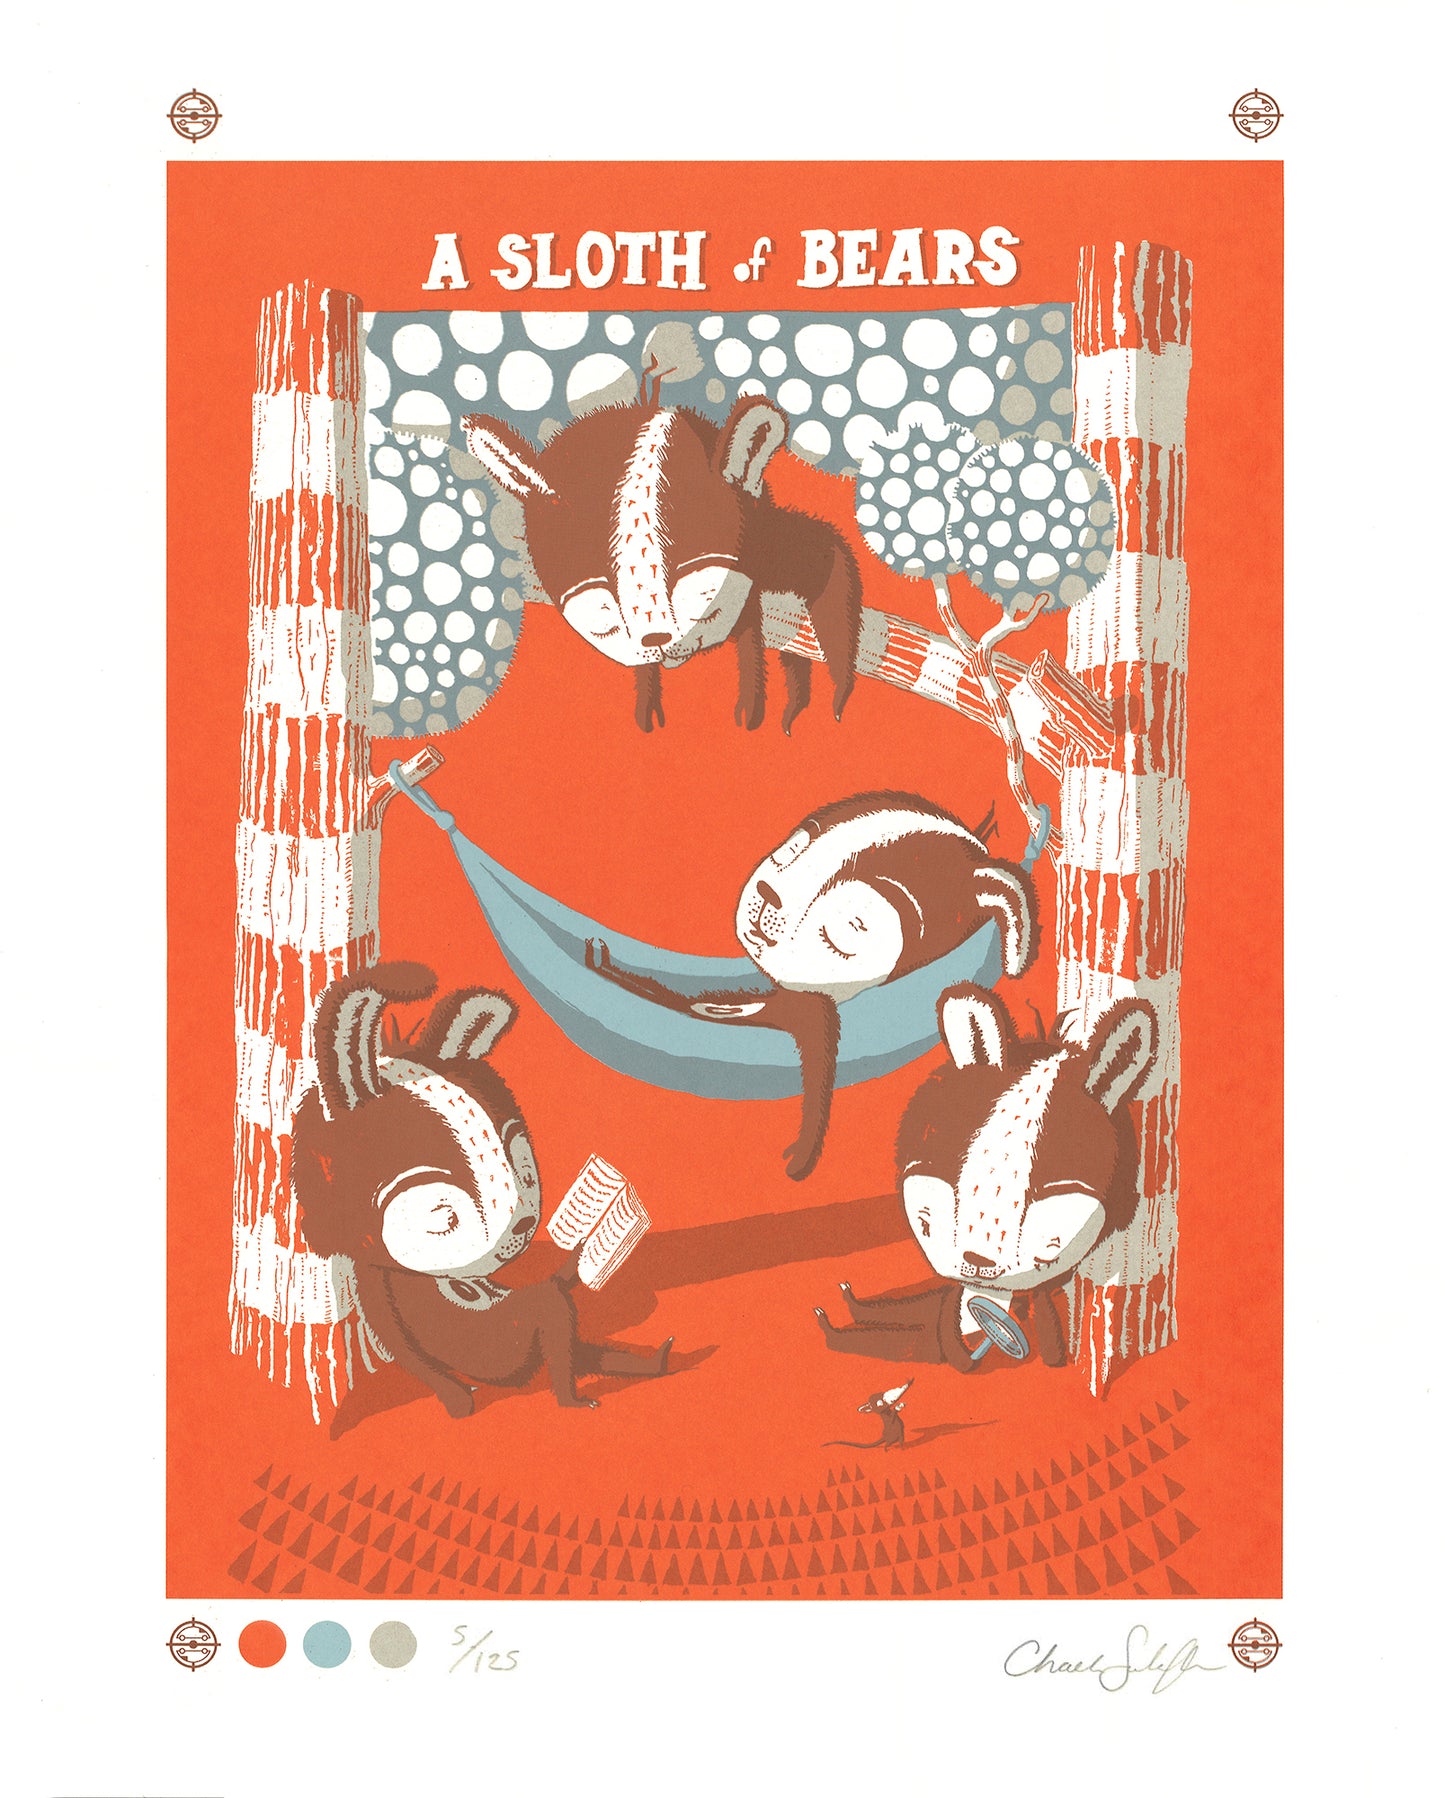 Sloth of Bears